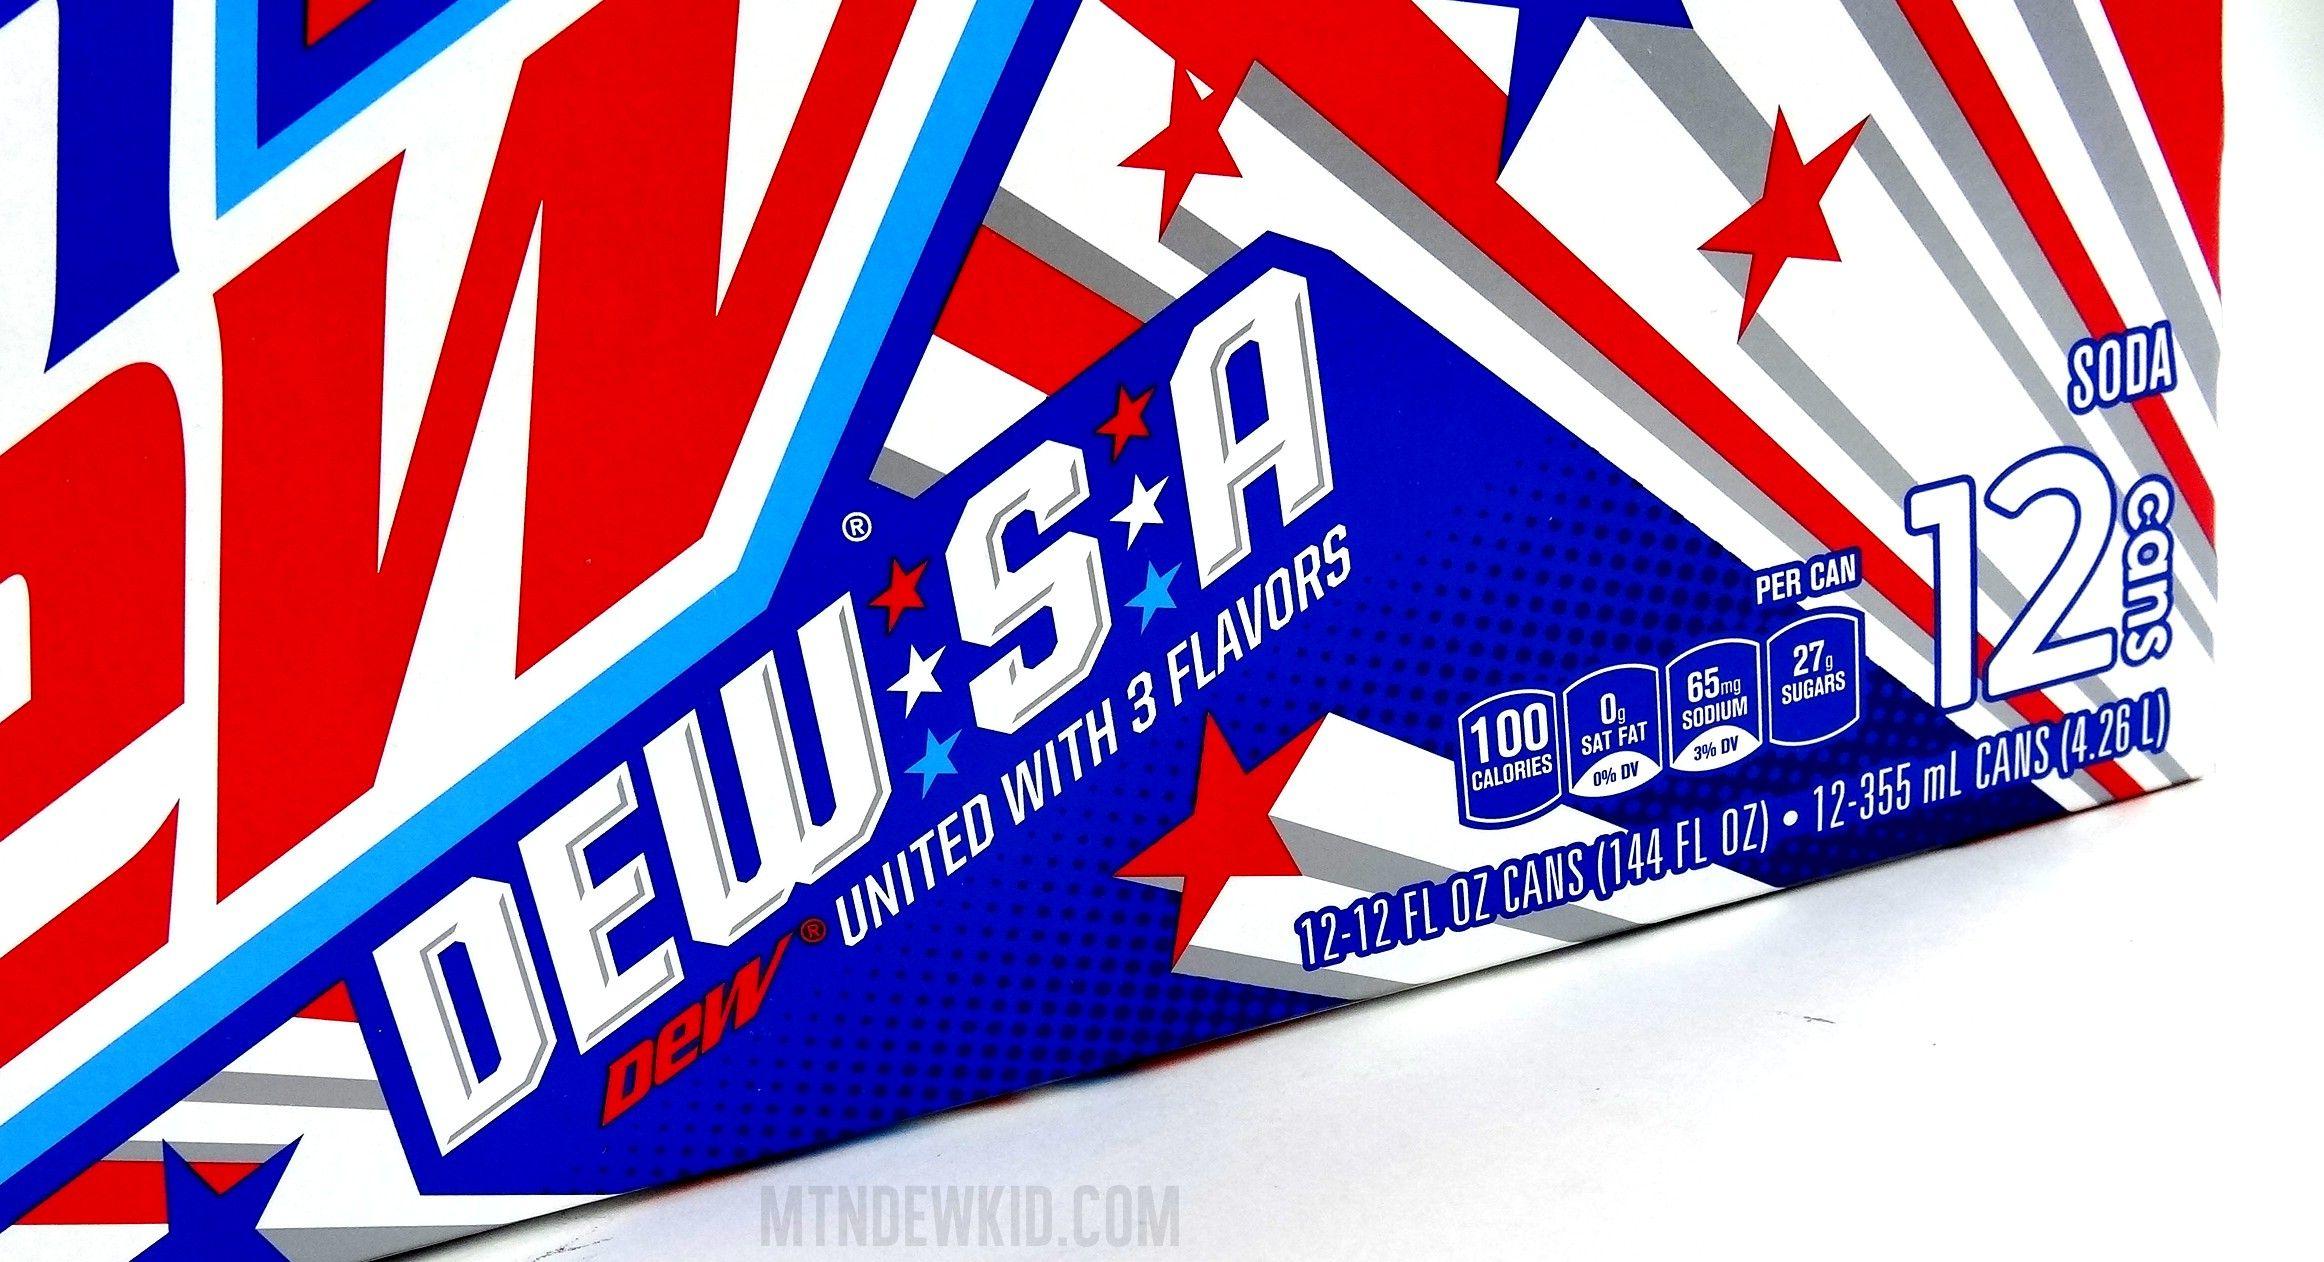 Dew SA Logo - A Look at Mtn Dew's DewSA Graphics | Mtn Dew Kid